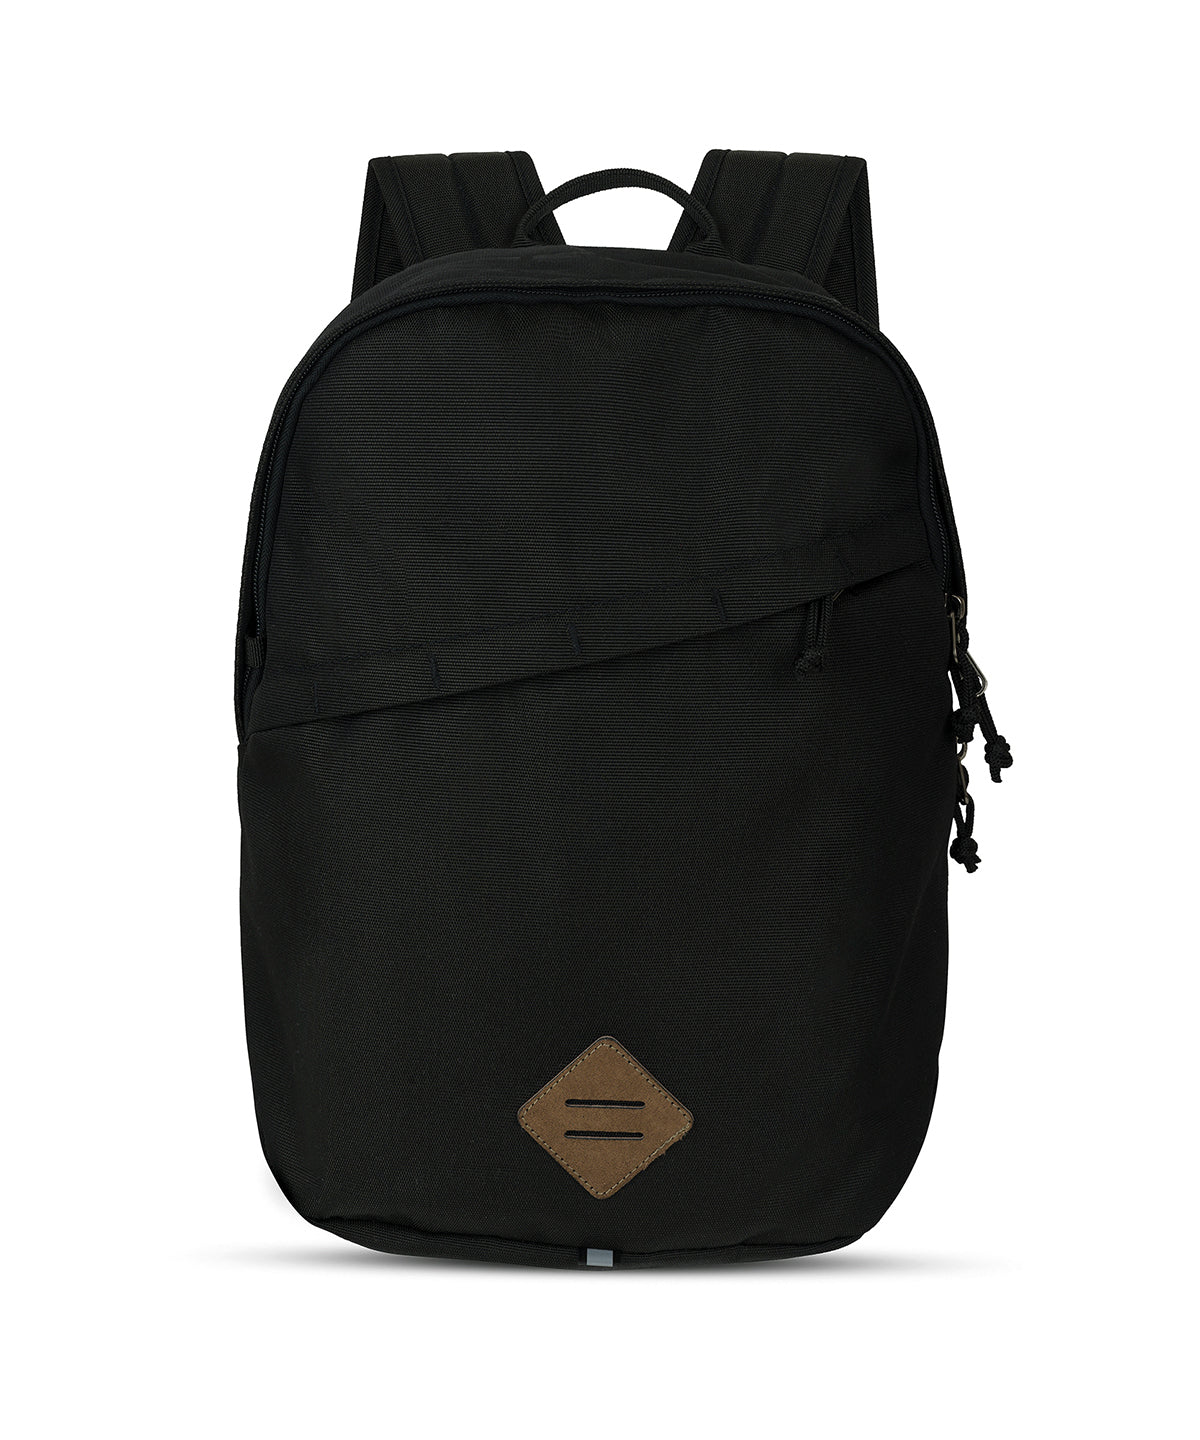 Personalised Bags - Black Craghoppers Expert Kiwi backpack 14L